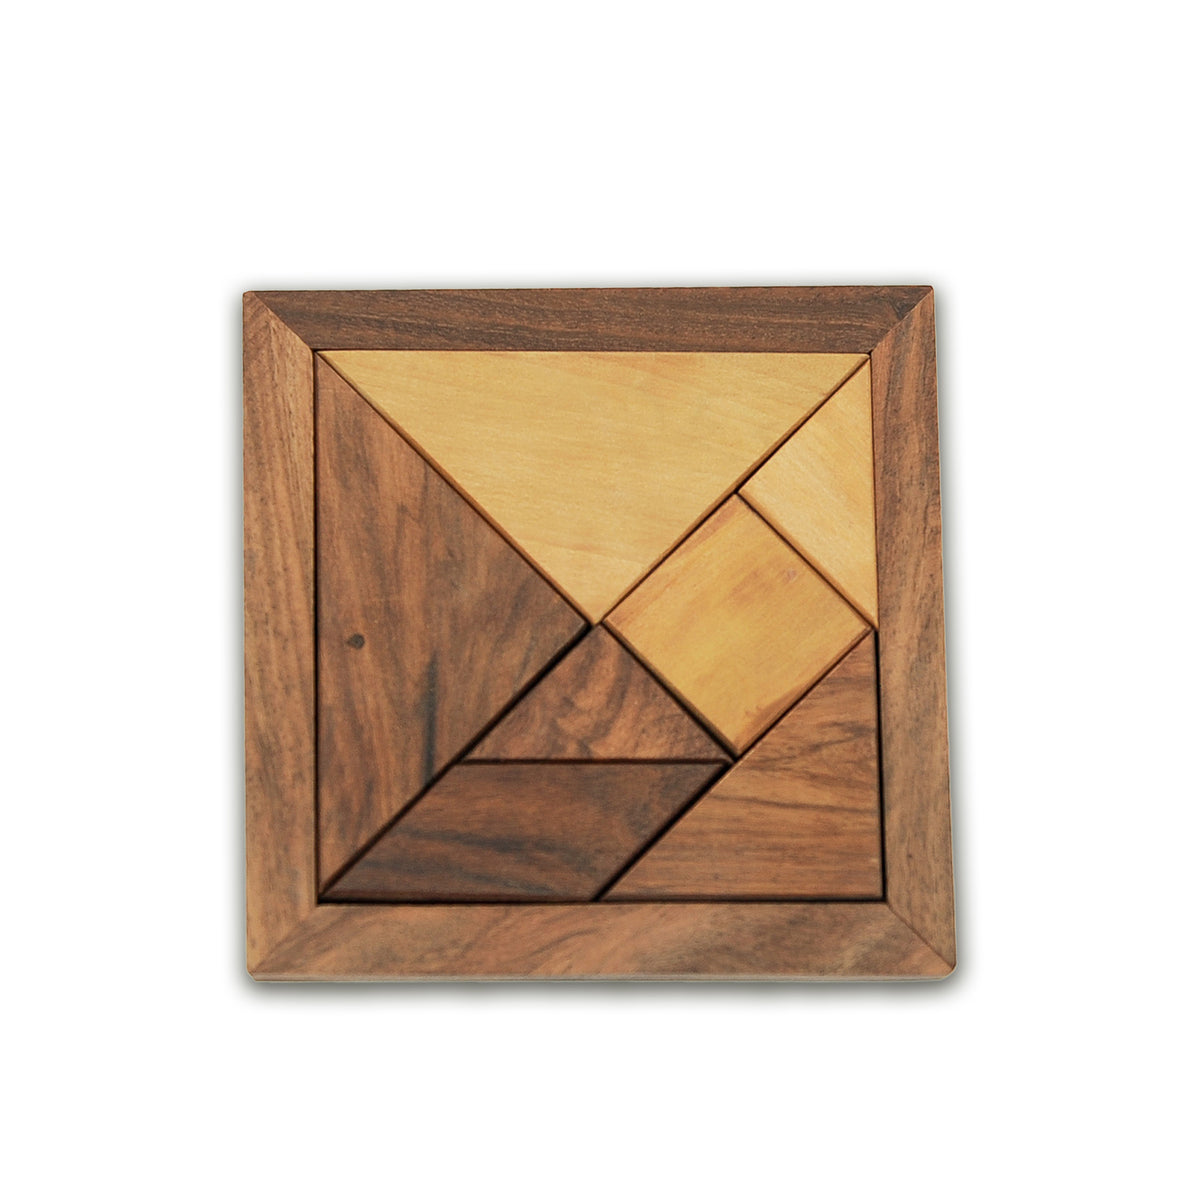 Wooden Tangram | Brain Teaser Games | Fun & Learning